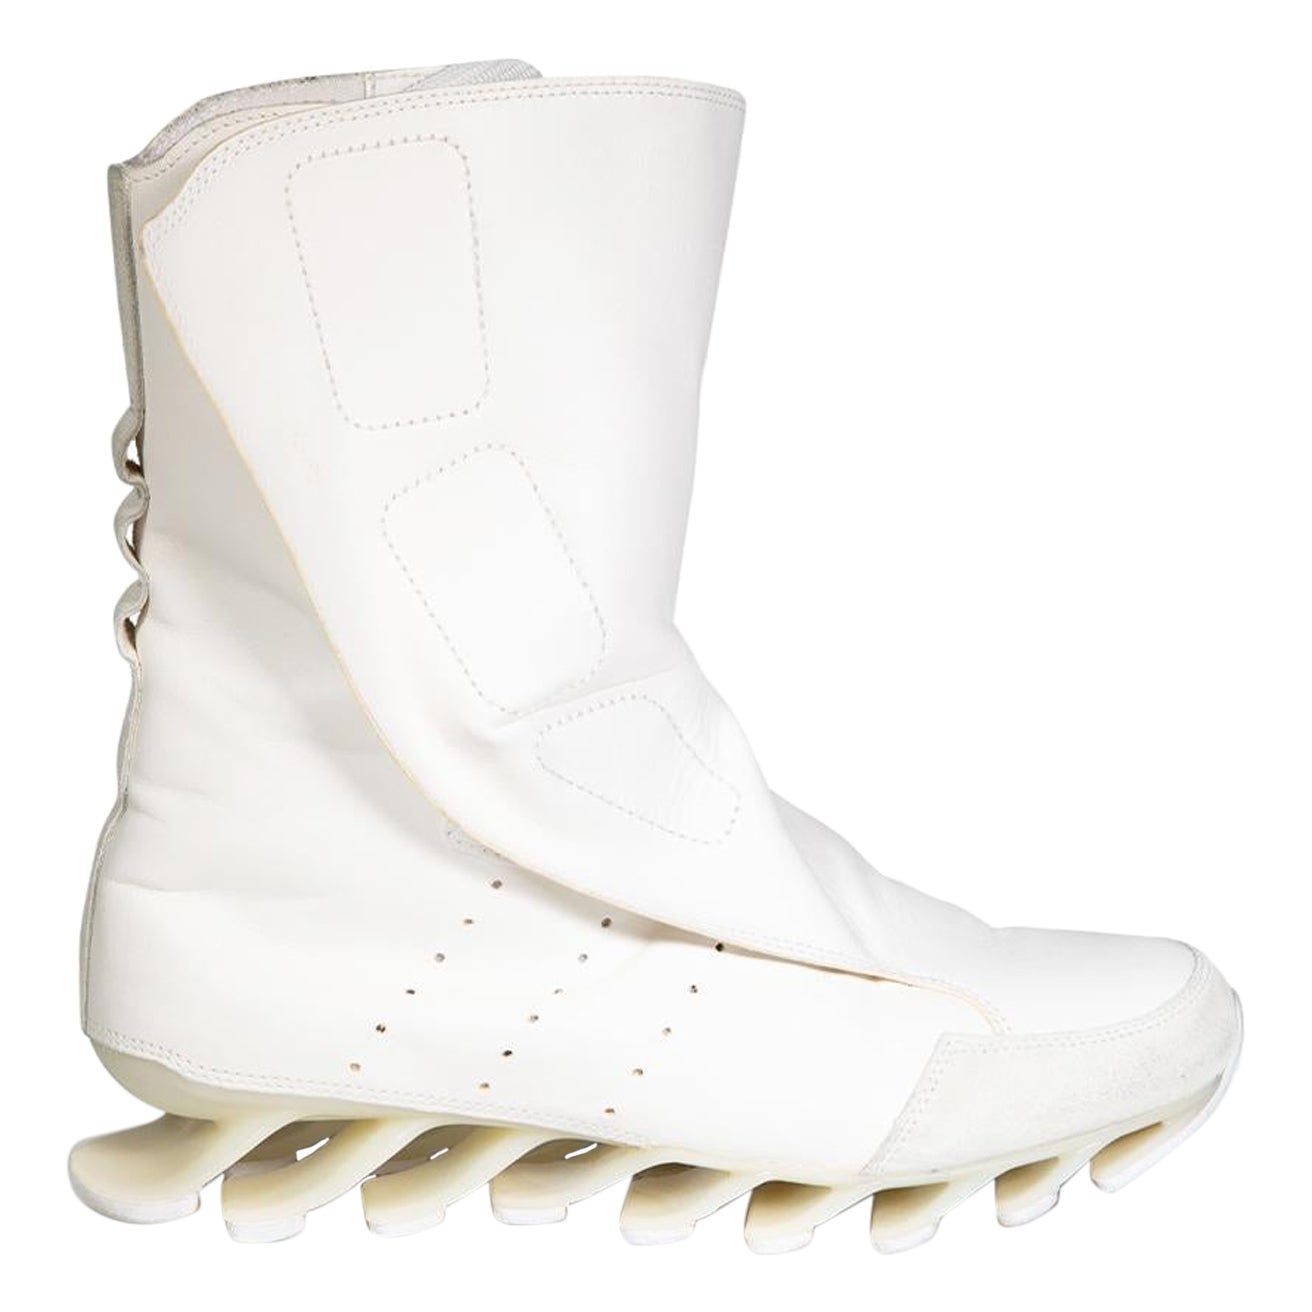 Rick Owens Adidas x Rick Owens Weiße Springblade-Stiefel aus Leder Größe UK 6